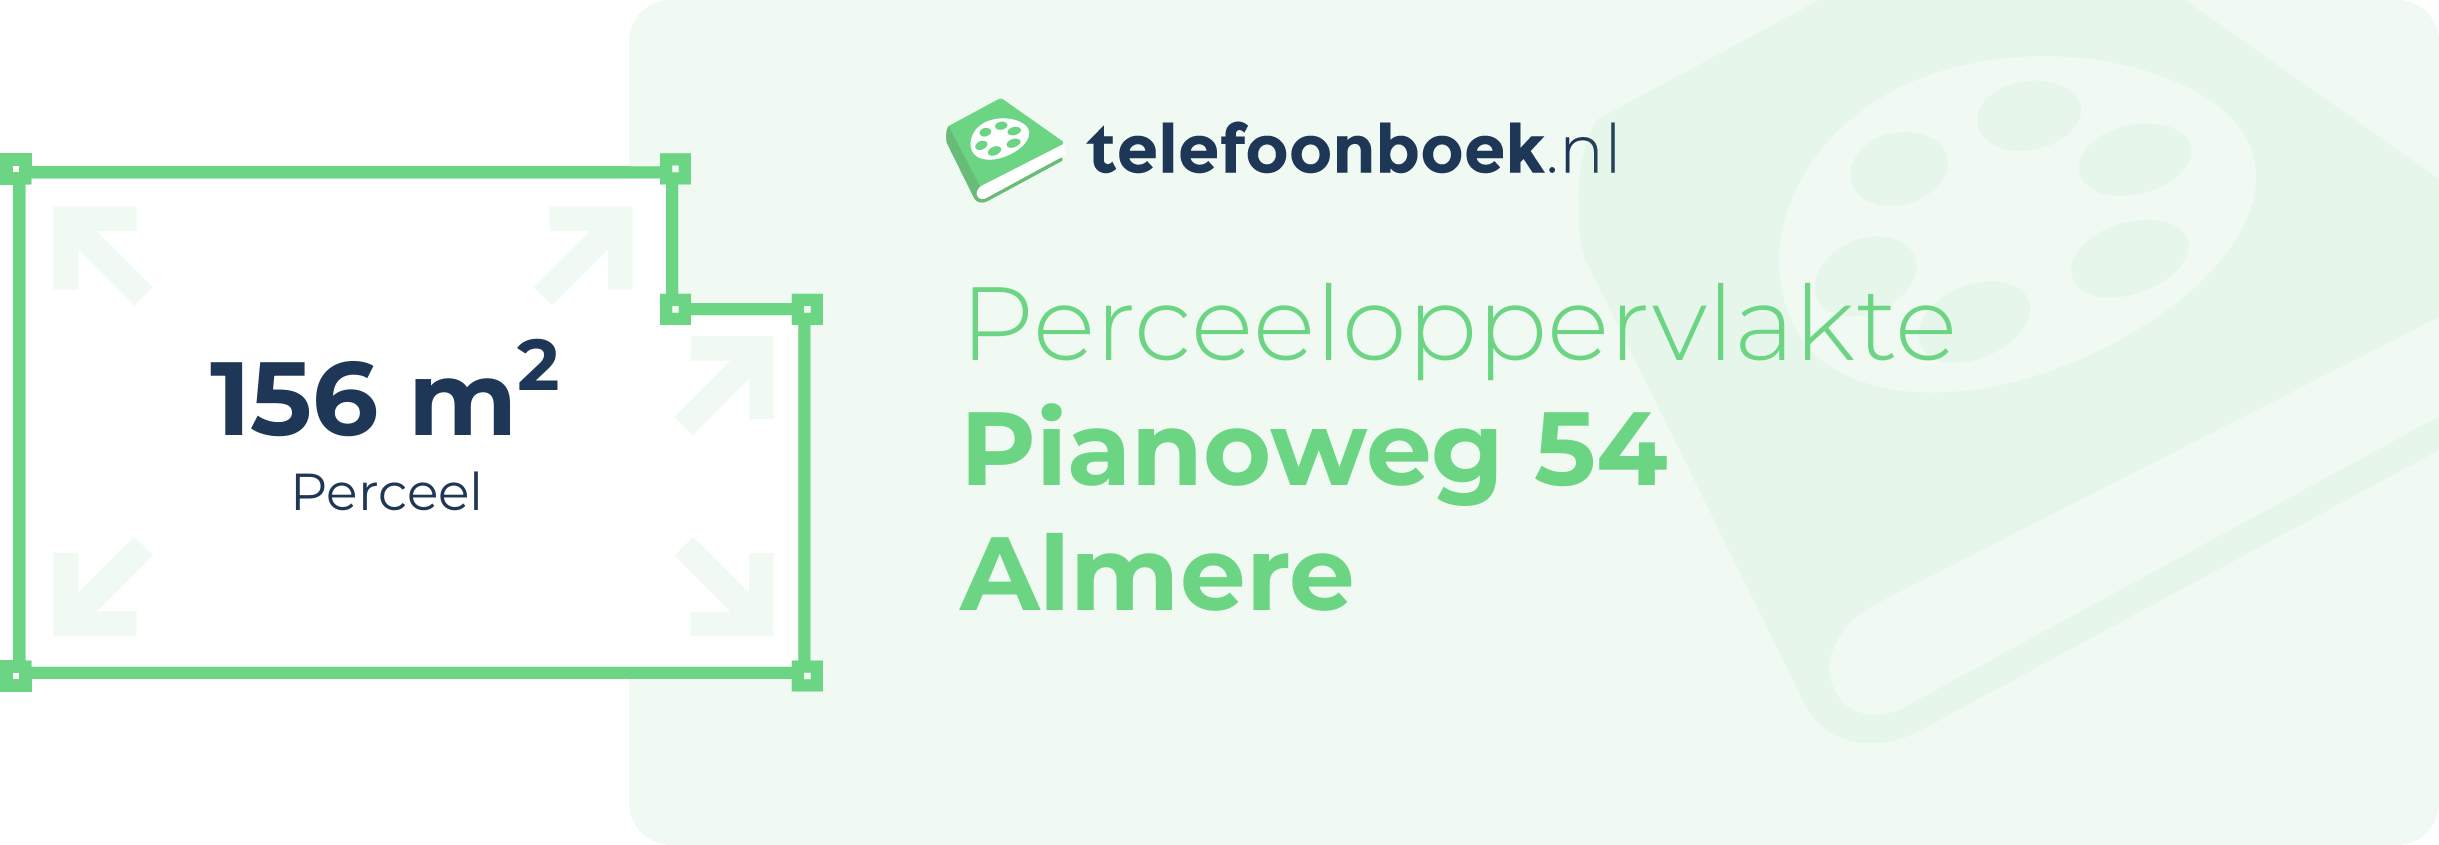 Perceeloppervlakte Pianoweg 54 Almere